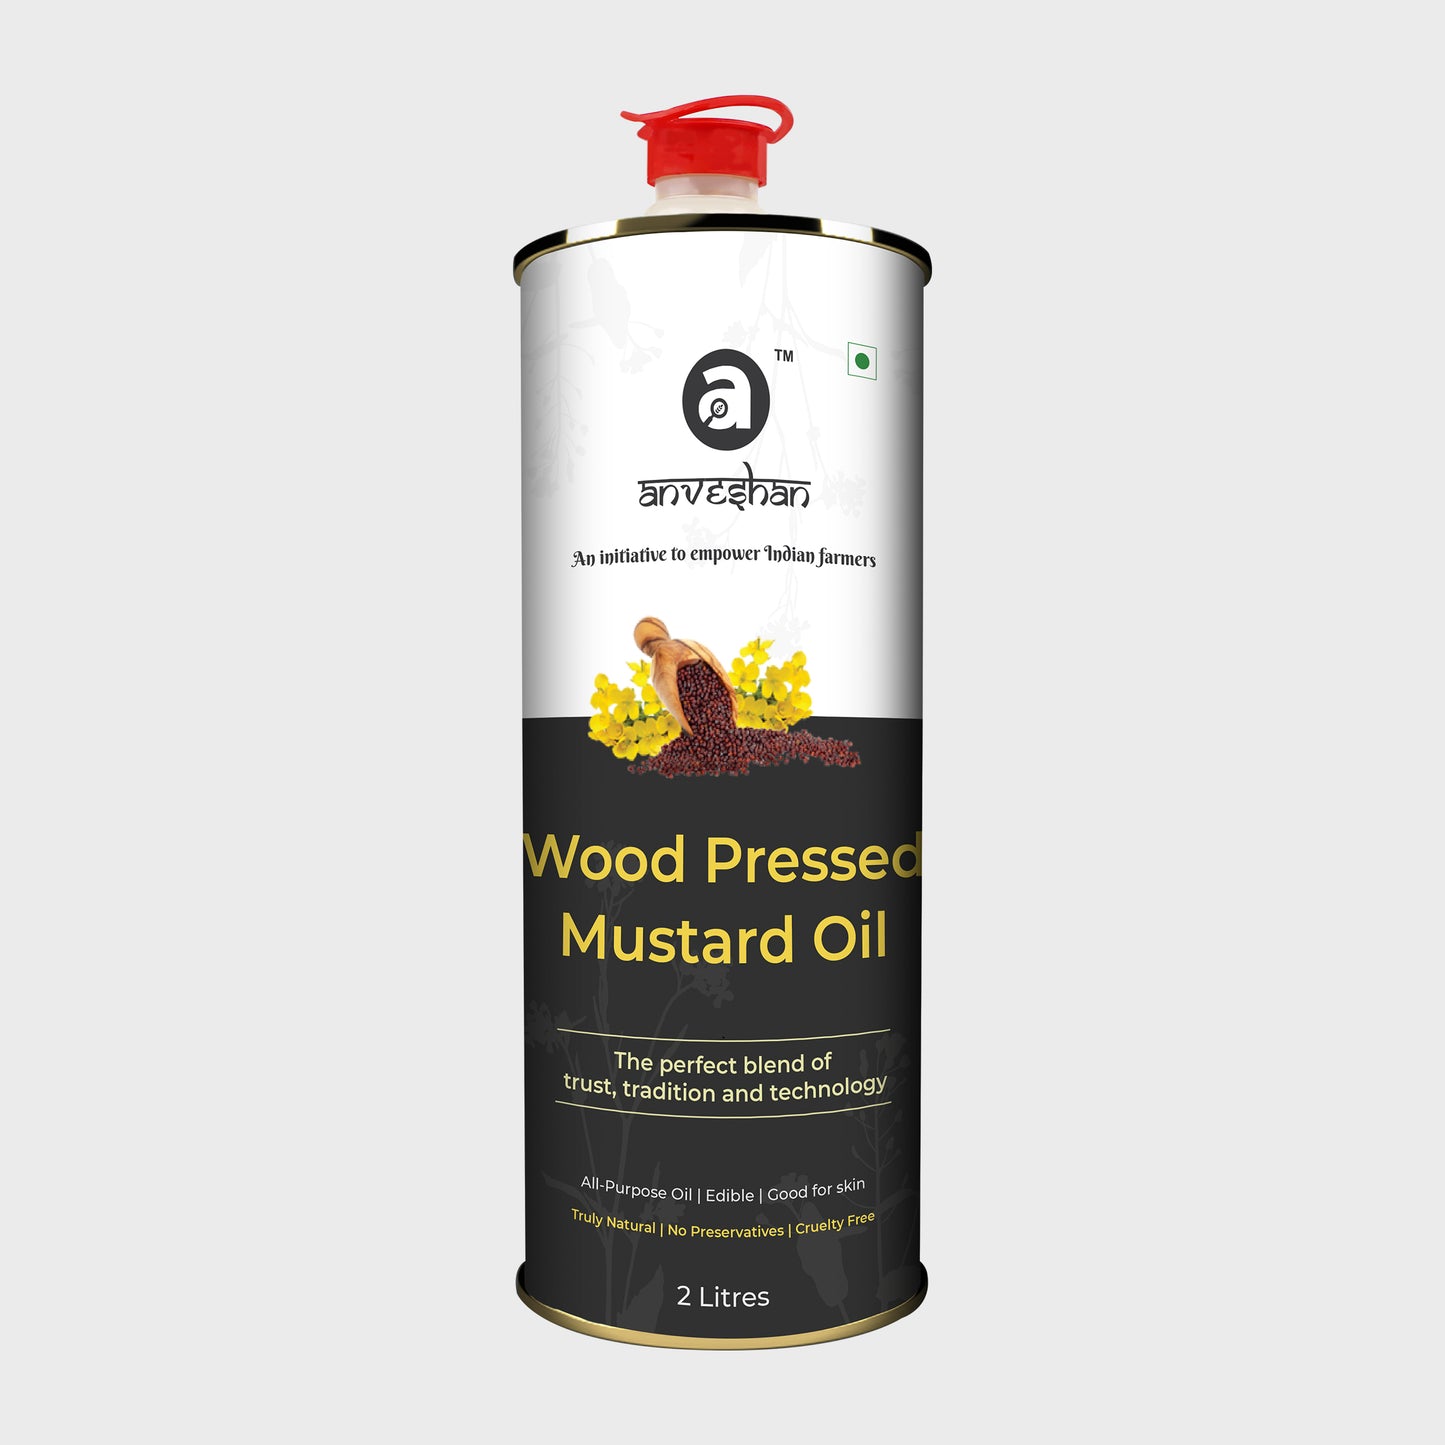 Wood-Pressed Black Mustard Oil